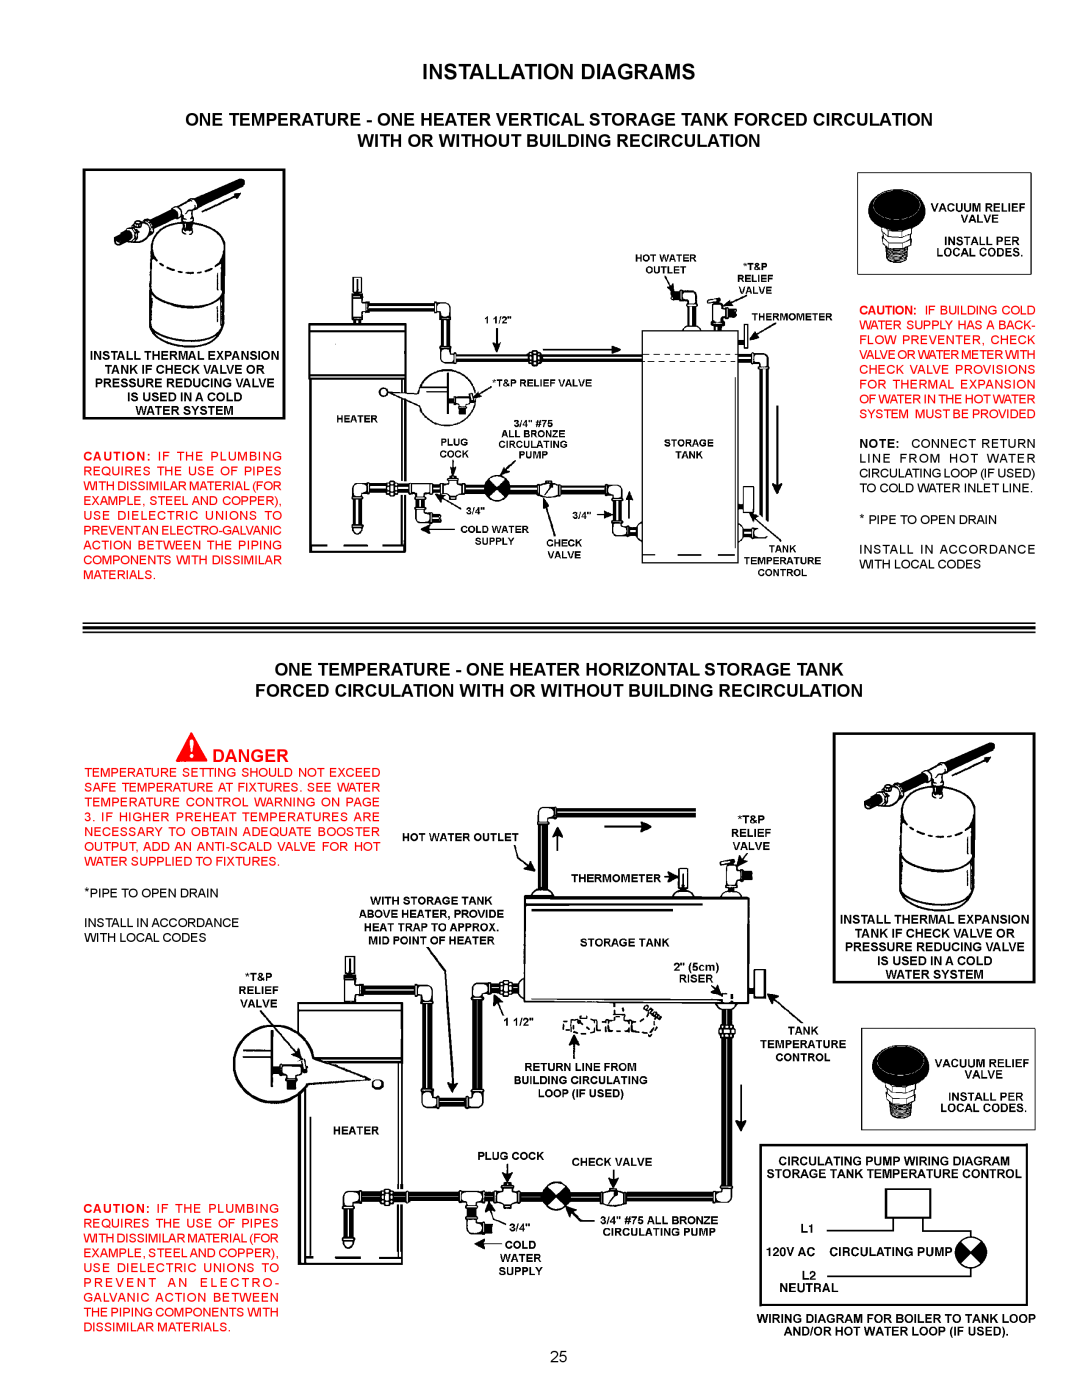 Ferguson JWSH100150 Installation Diagrams, One Temperature - One Heater Vertical Storage Tank Forced Circulation, Danger 